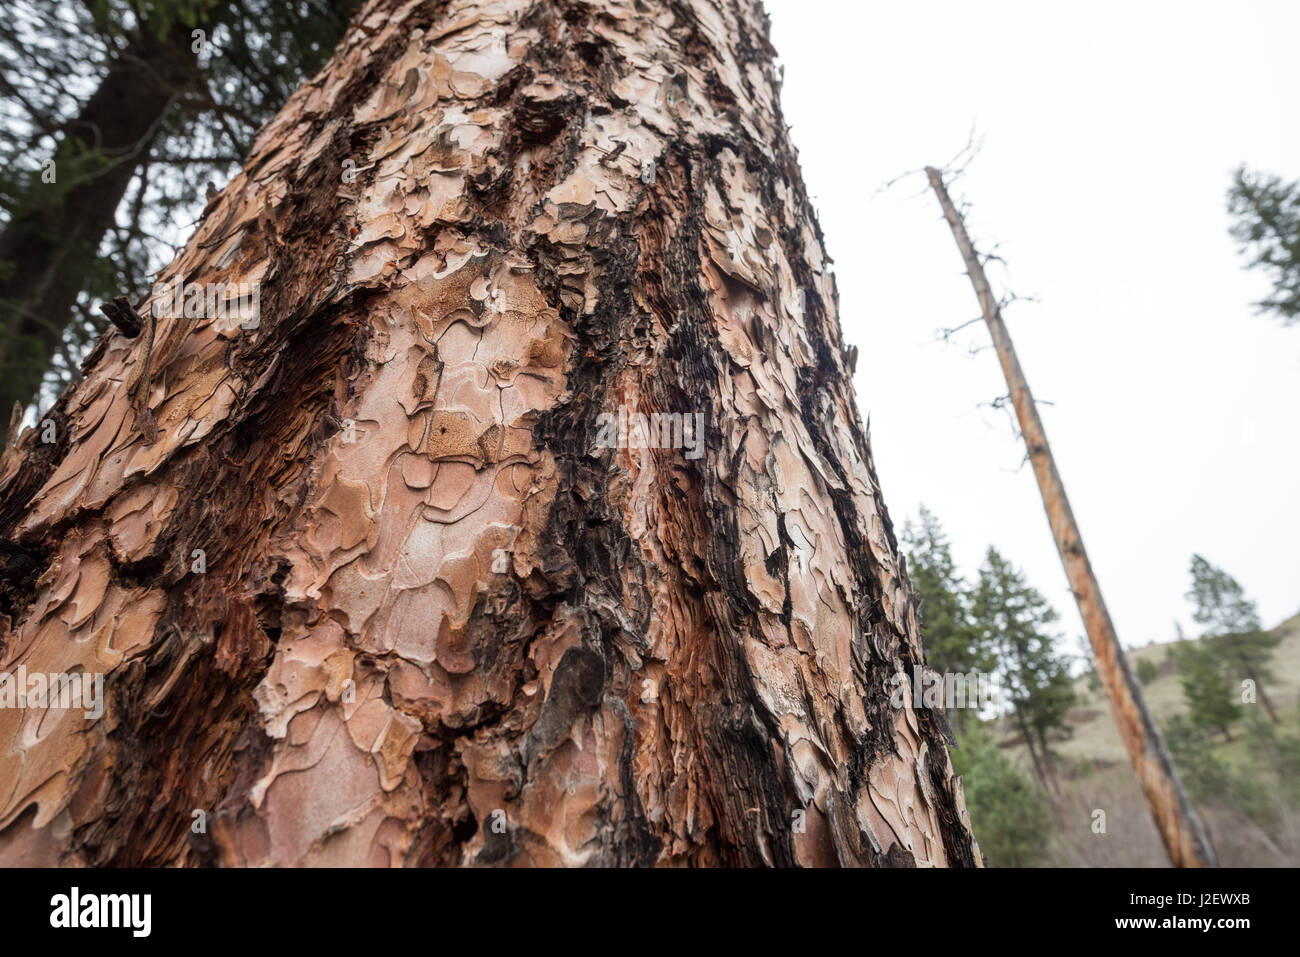 Ponderosa pine tree, Wallowa - Whitman National Forest, Oregon. Stock Photo